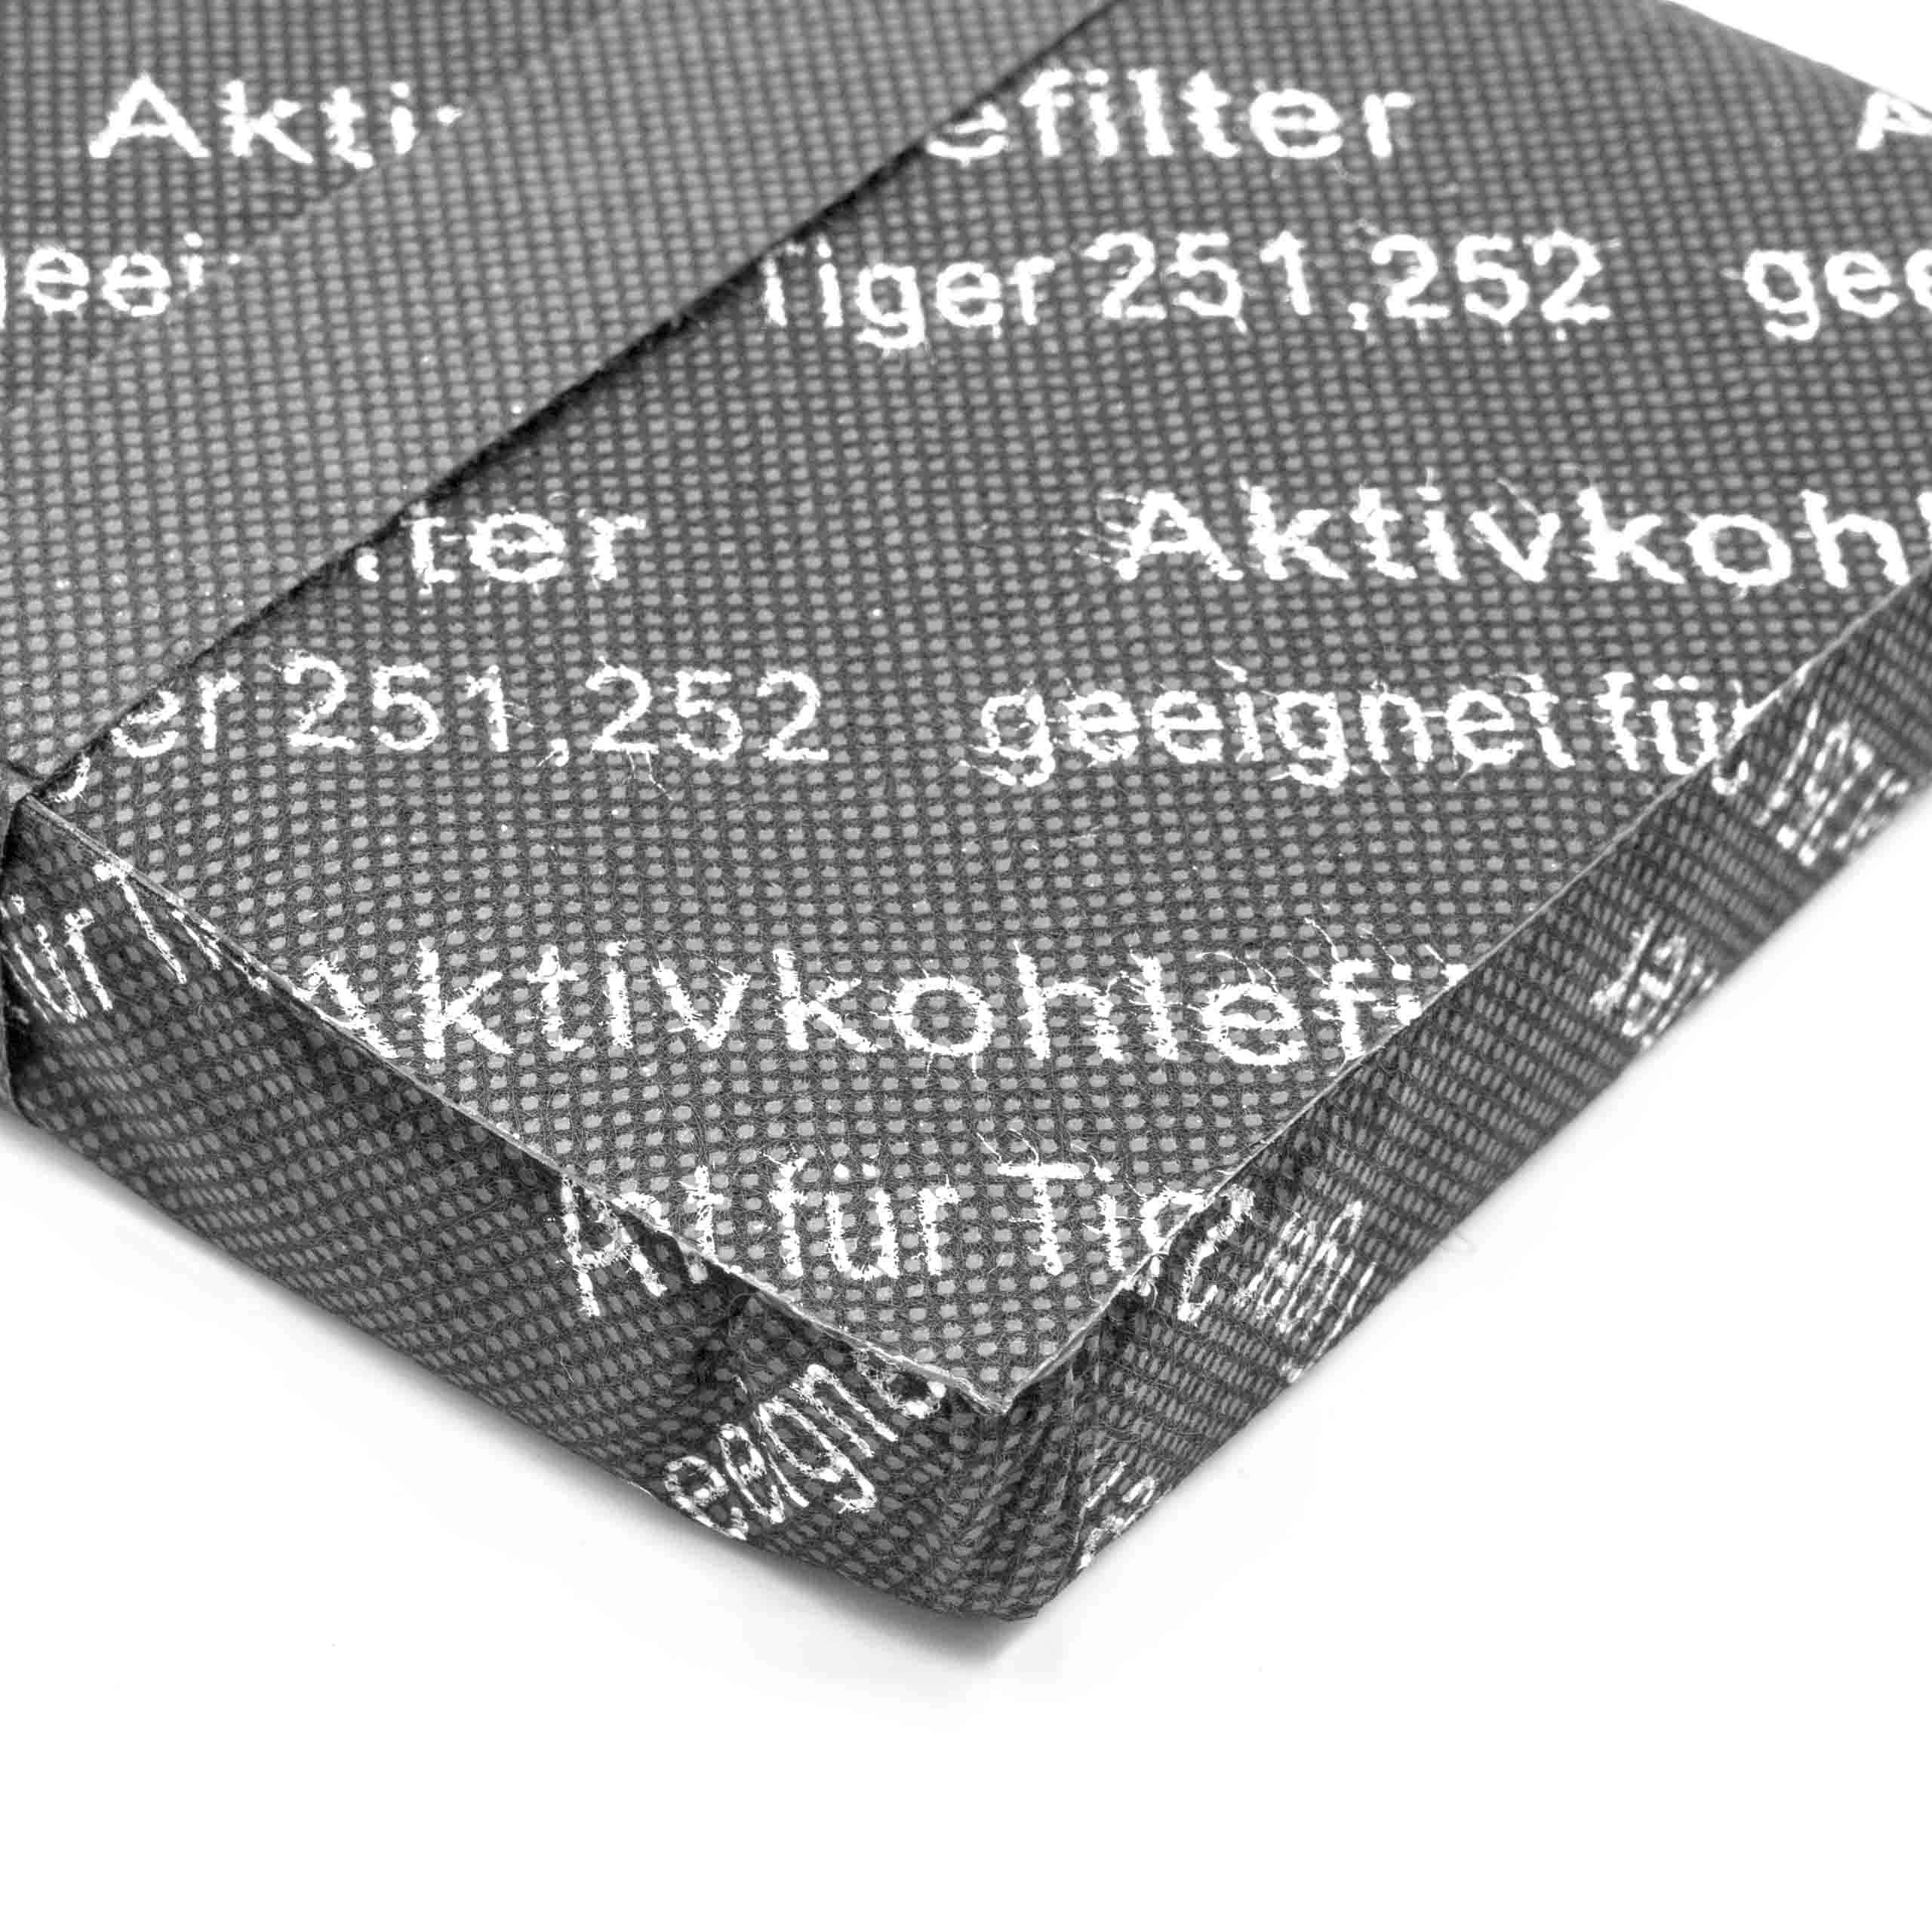 1x activated carbon filter suitable for Vorwerk Tiger 250, 251, 252, 260 Vacuum Cleaner